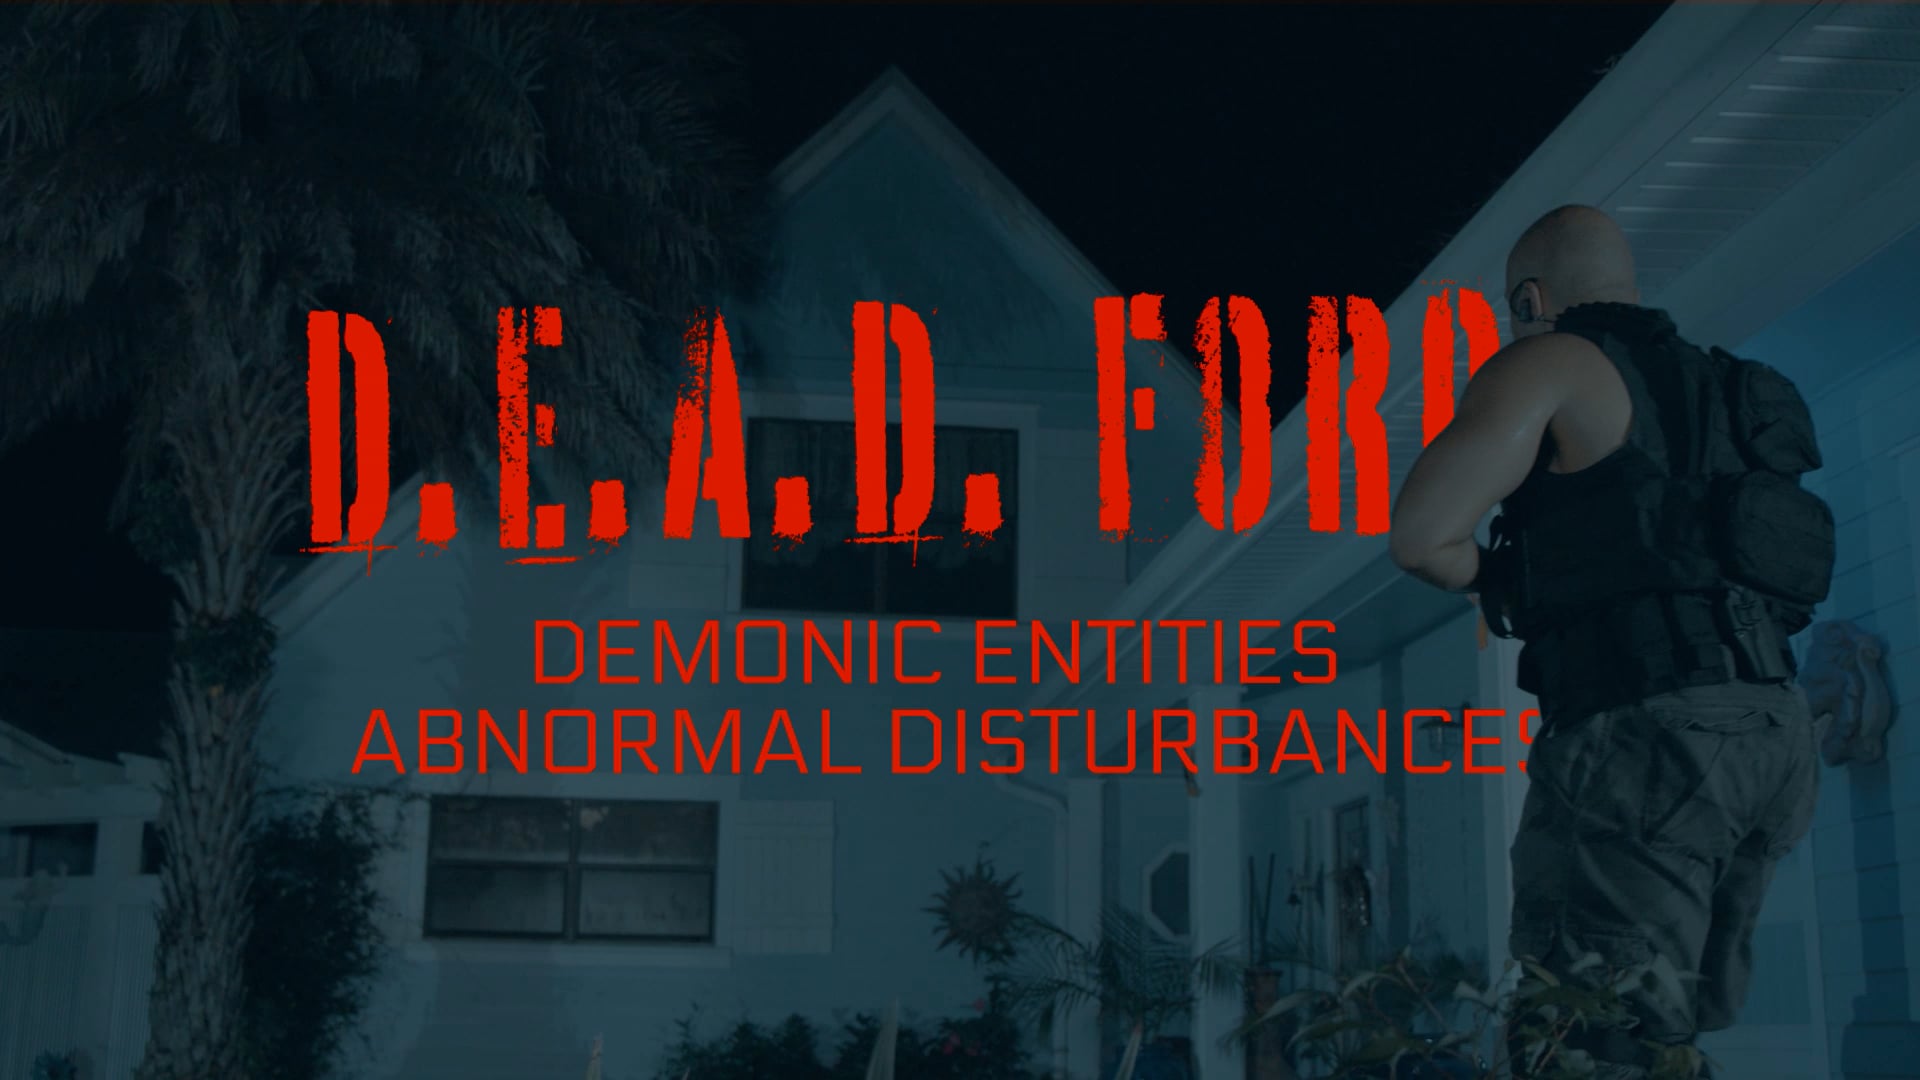 D.E.A.D. Force (Official Trailer)